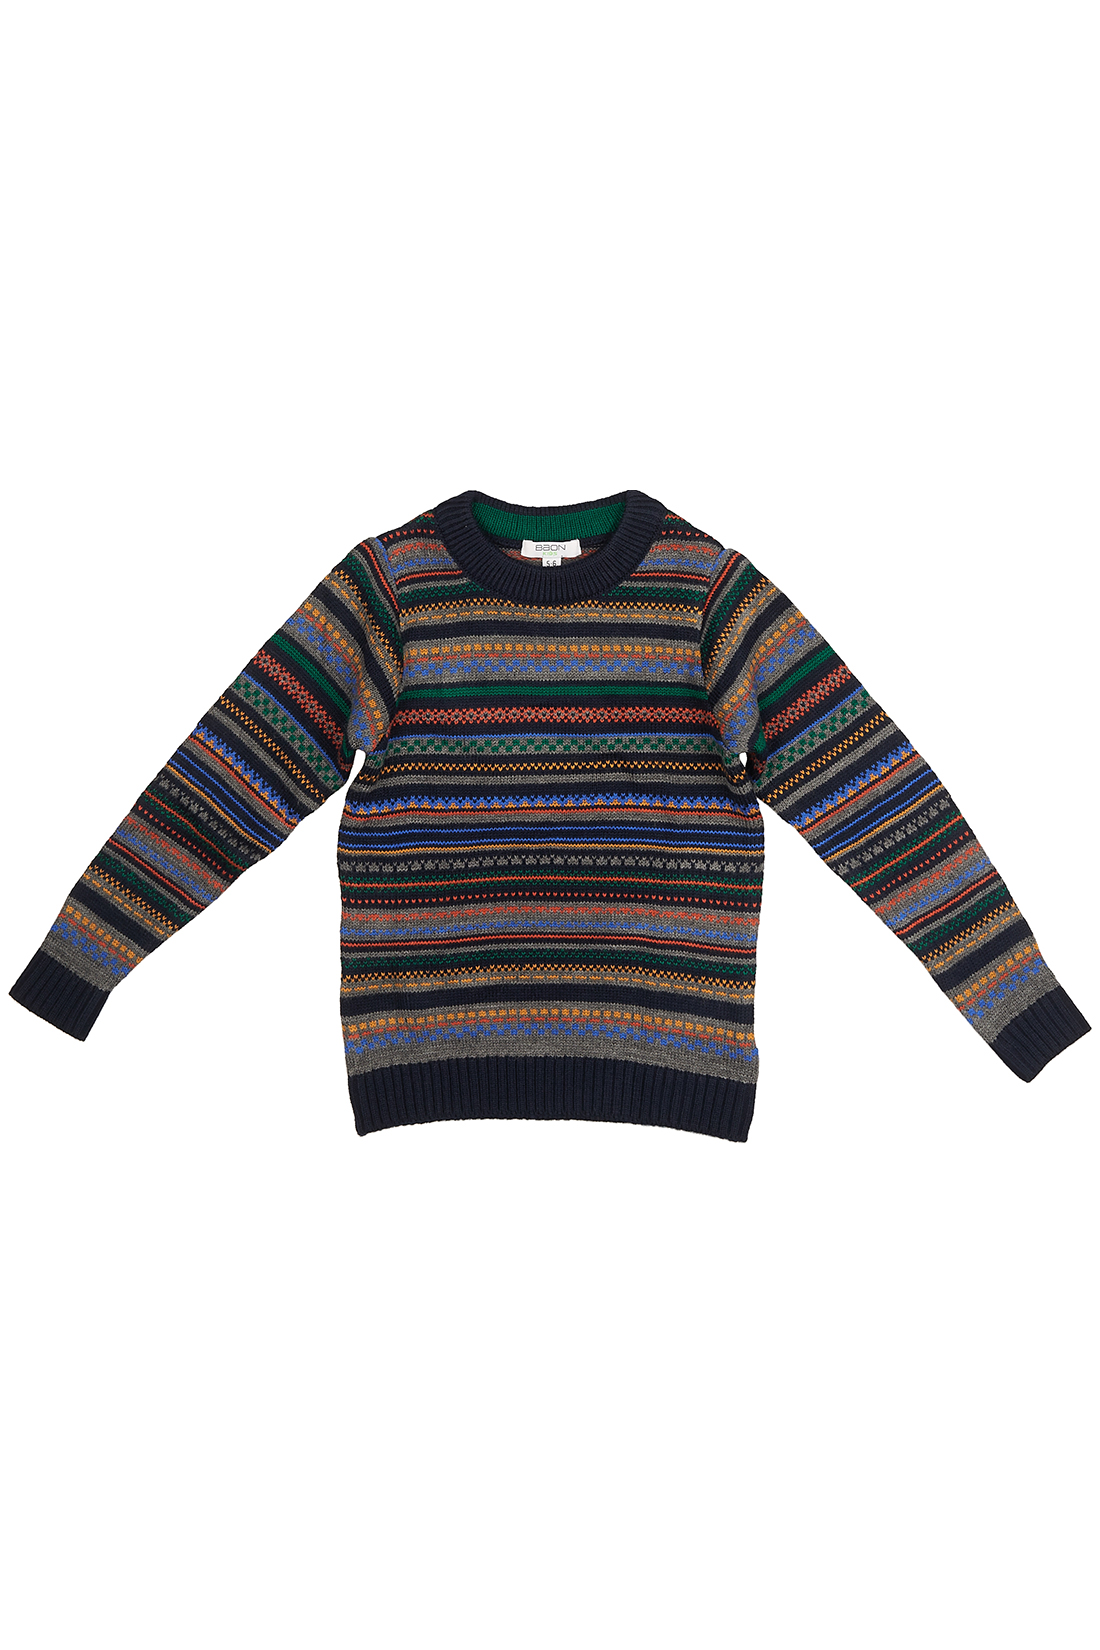 Джемпер для мальчика (арт. baon BK638504), размер 98-104, цвет multicolor#многоцветный Джемпер для мальчика (арт. baon BK638504) - фото 4